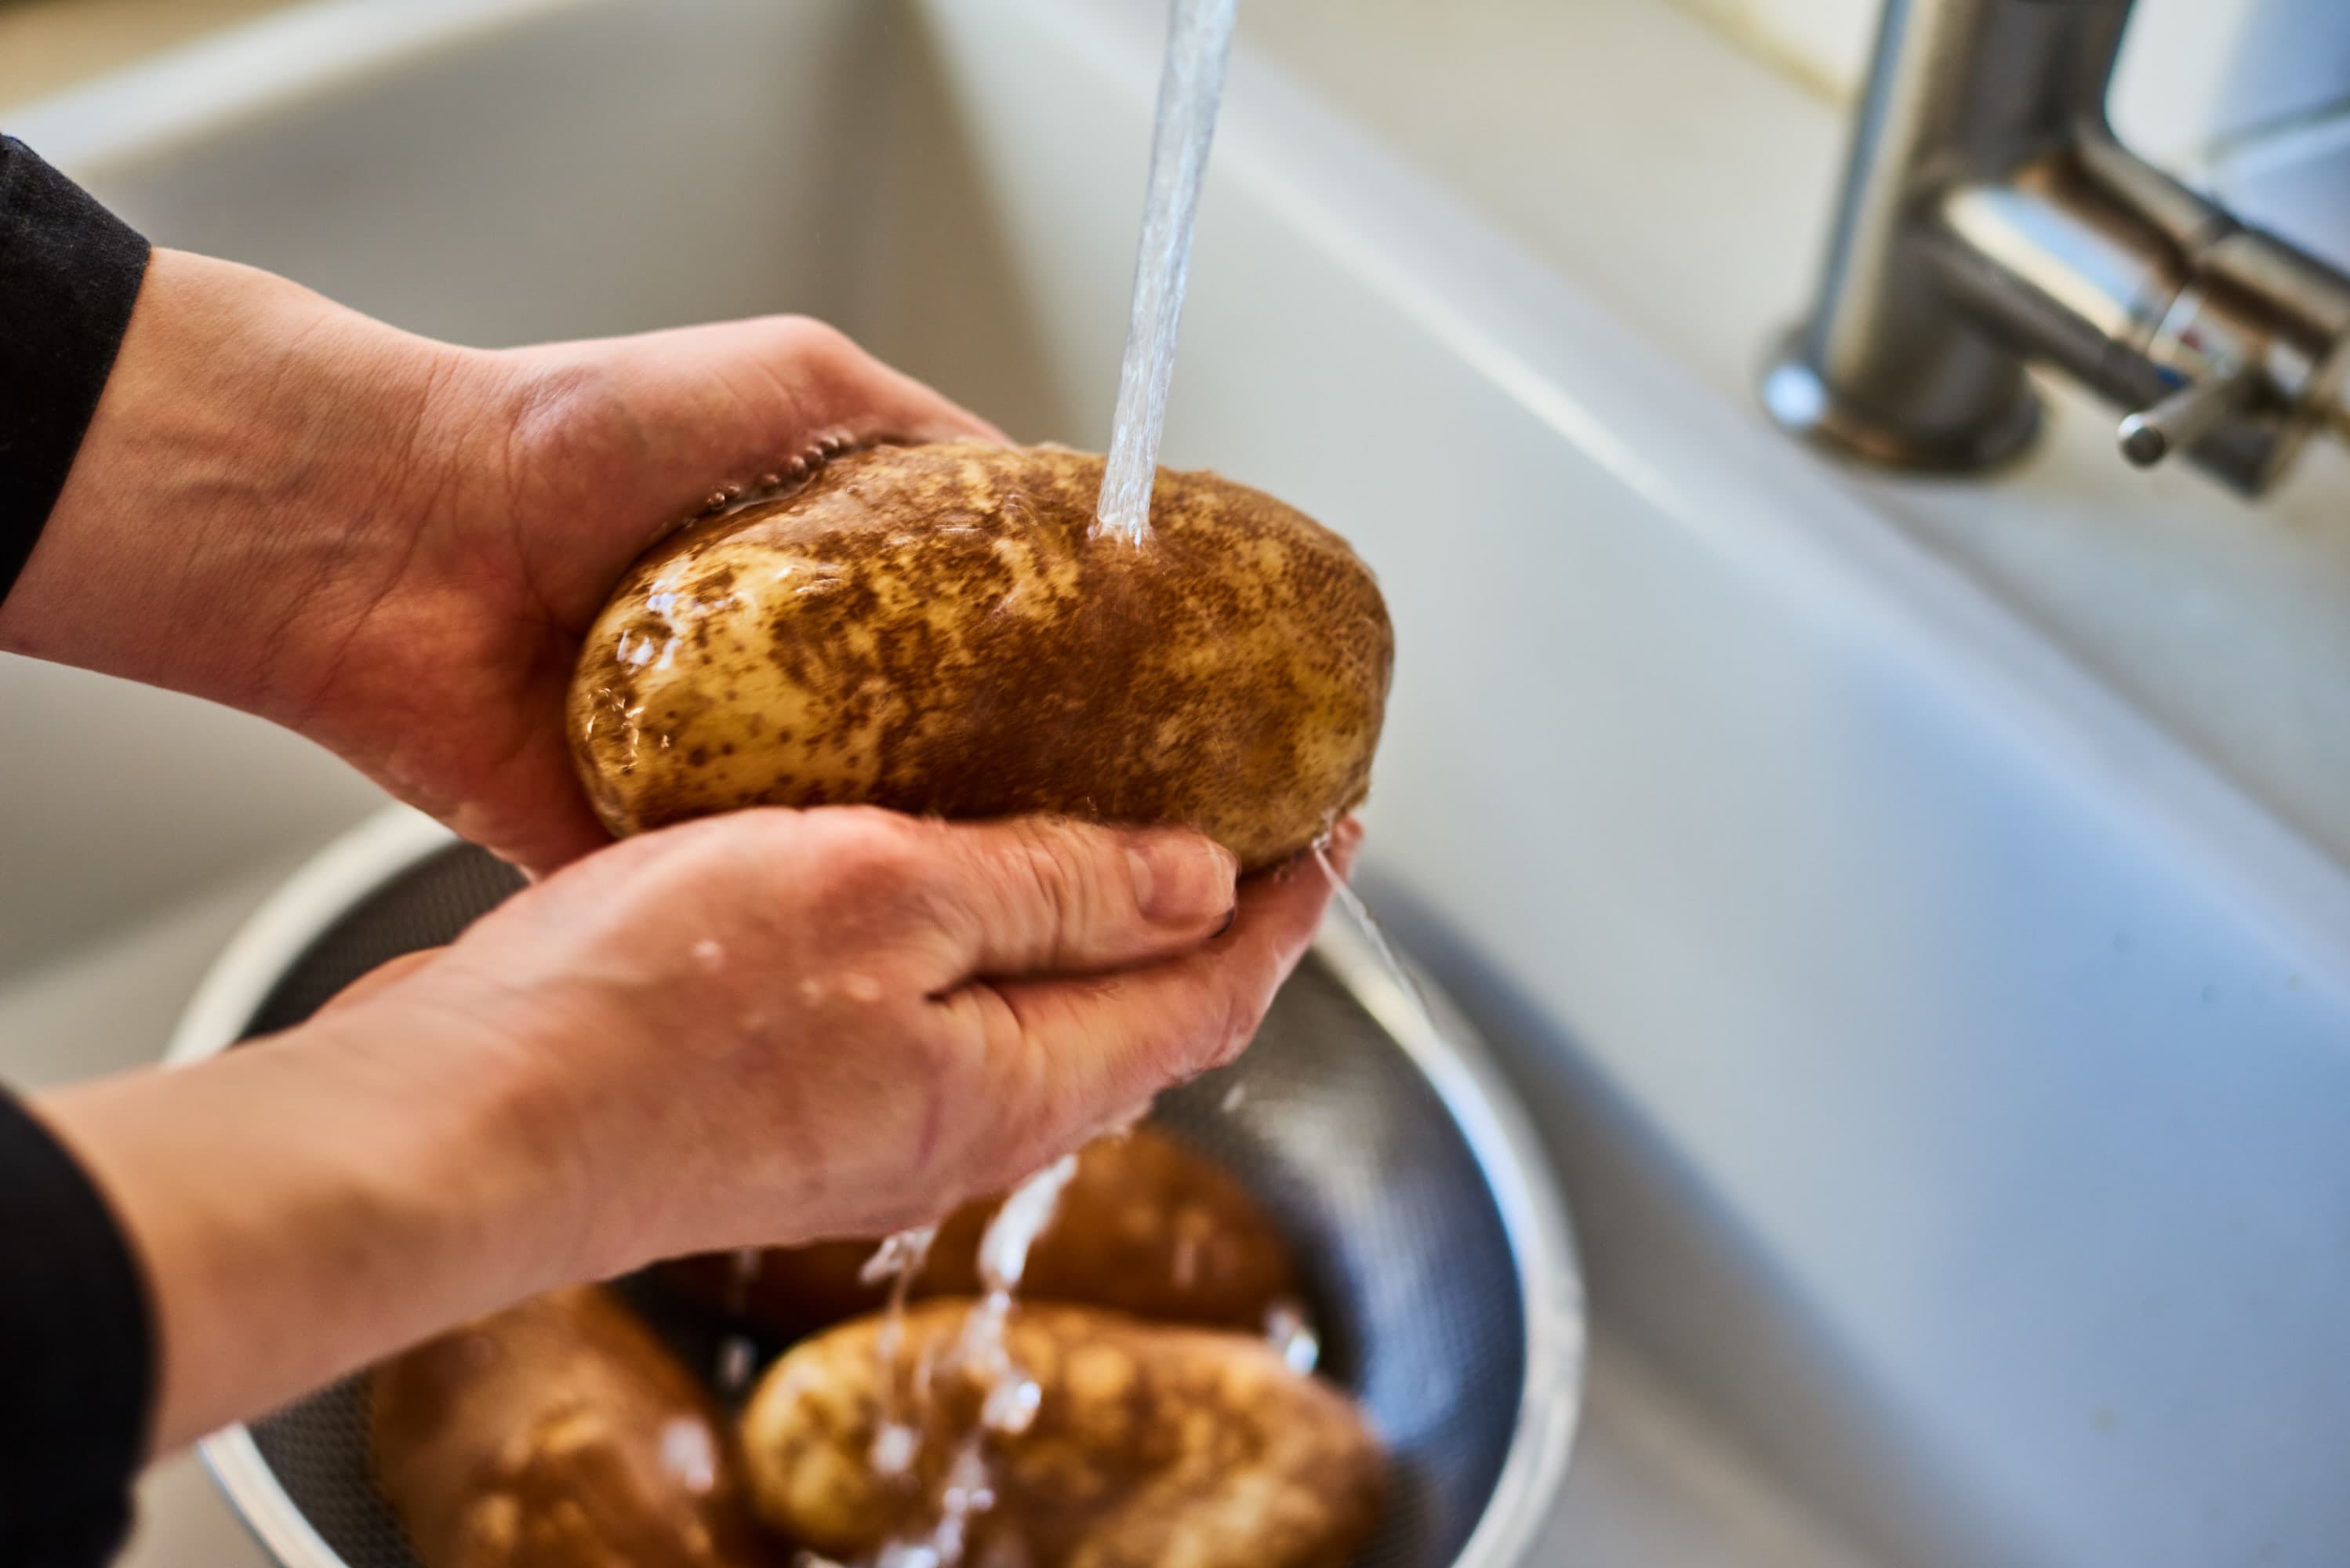 https://cdn.apartmenttherapy.info/image/upload/v1577135148/k/Photo/Series/2020-01-Skills-Battle-Update-How-to-Bake-a-Potato-in-the-Oven/Skills-Battle-Update-How-to-Bake-a-Potato-in-the-Oven_106.jpg